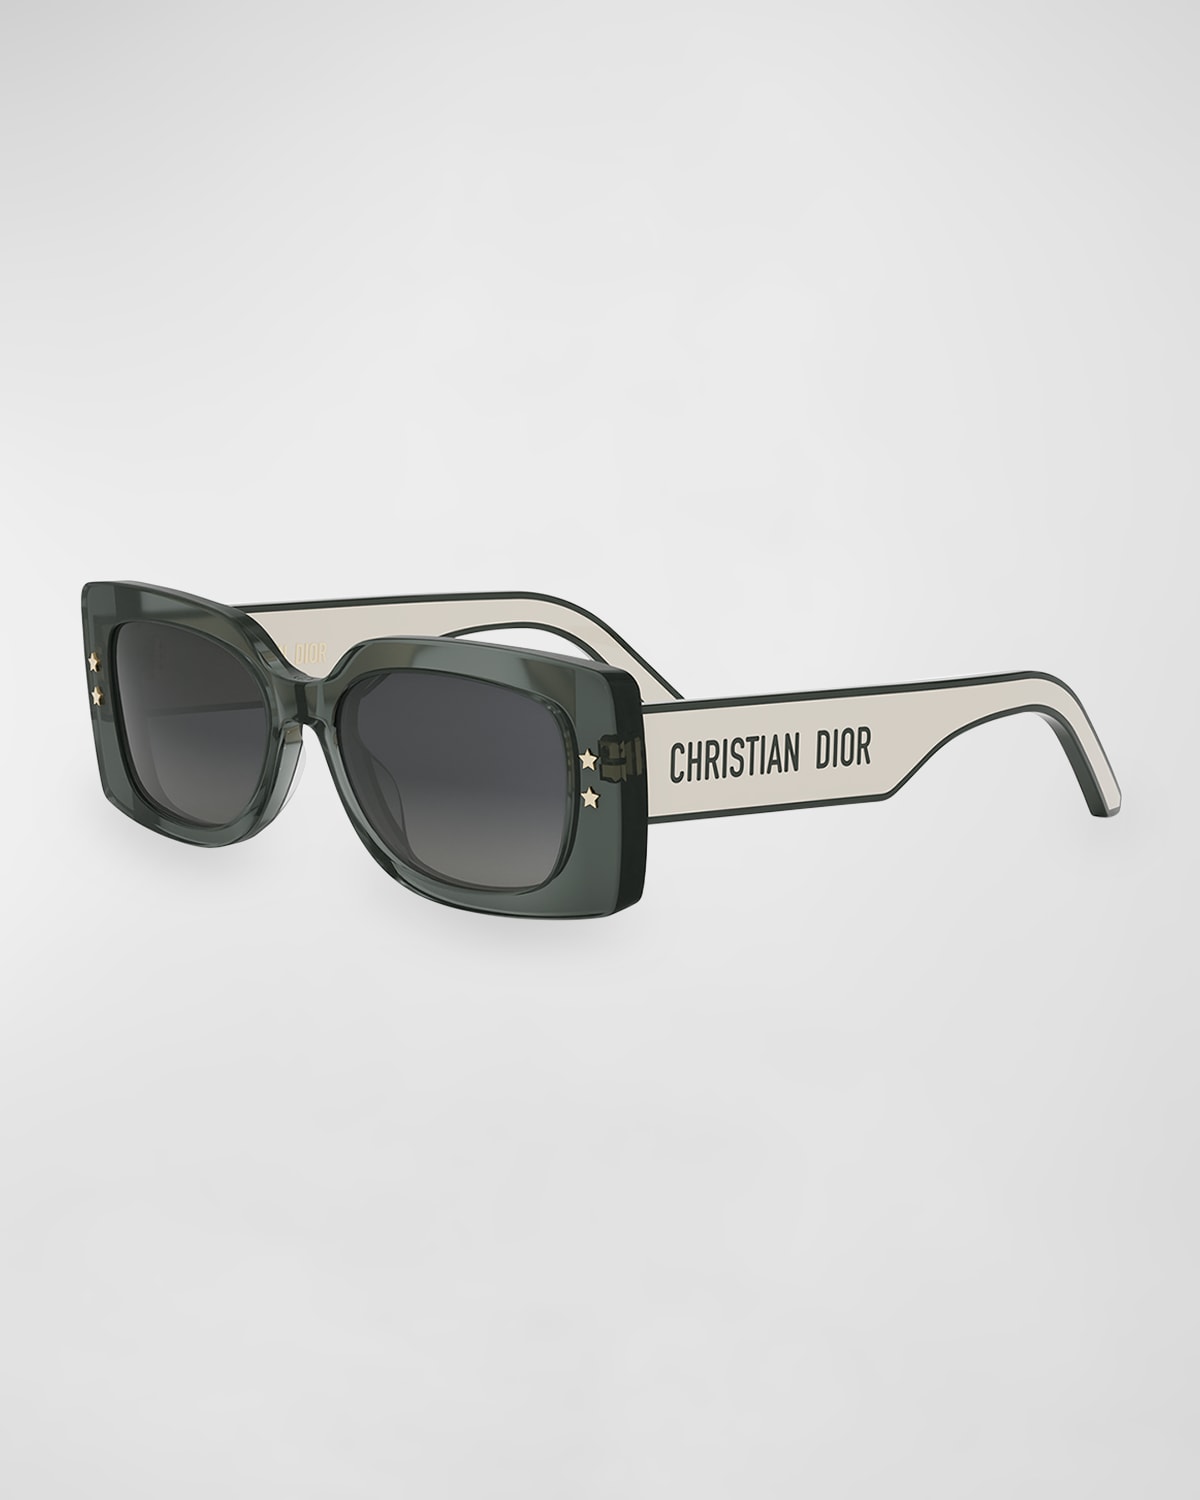 DiorPacific S1U Sunglasses